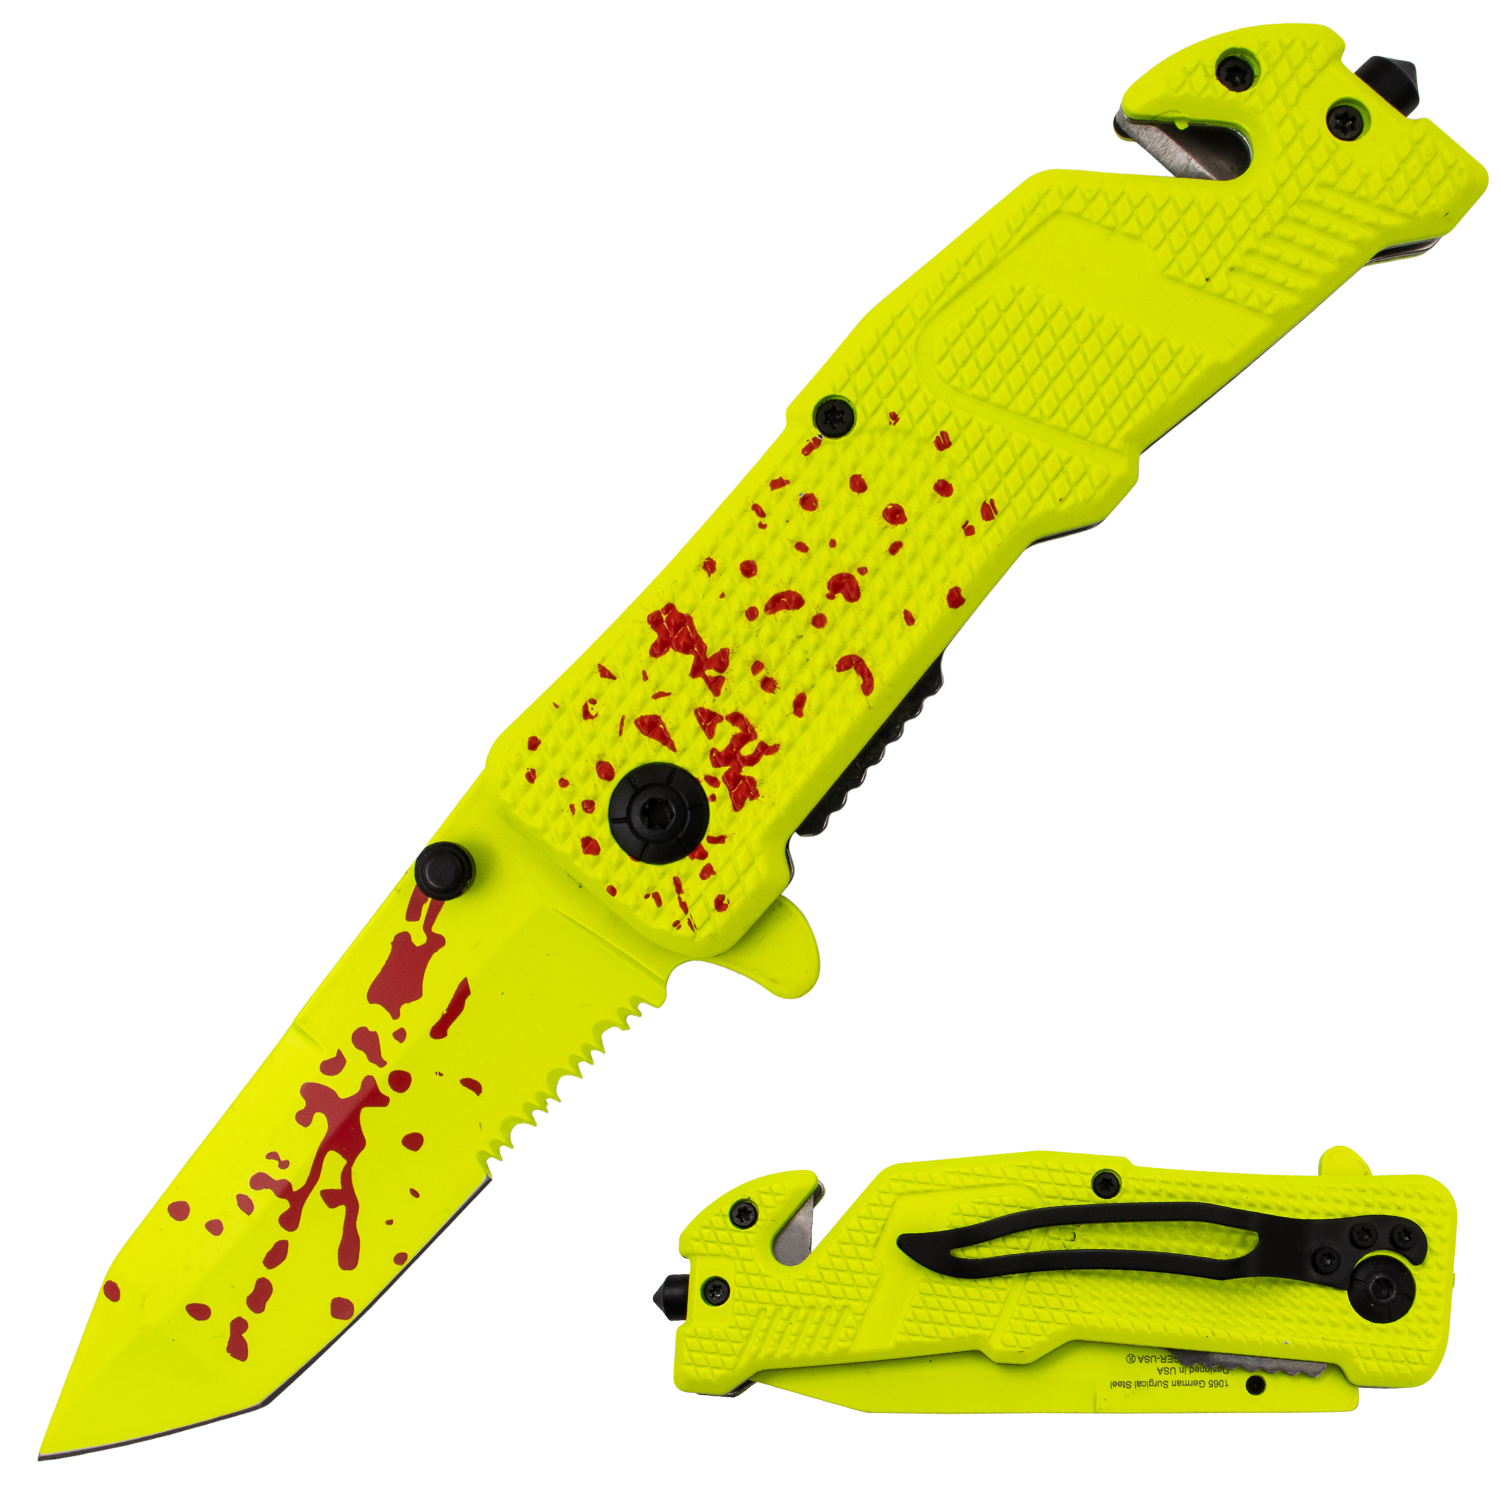 Tiger USA Trigger Action Knife Yellow Blood Handle Tanto